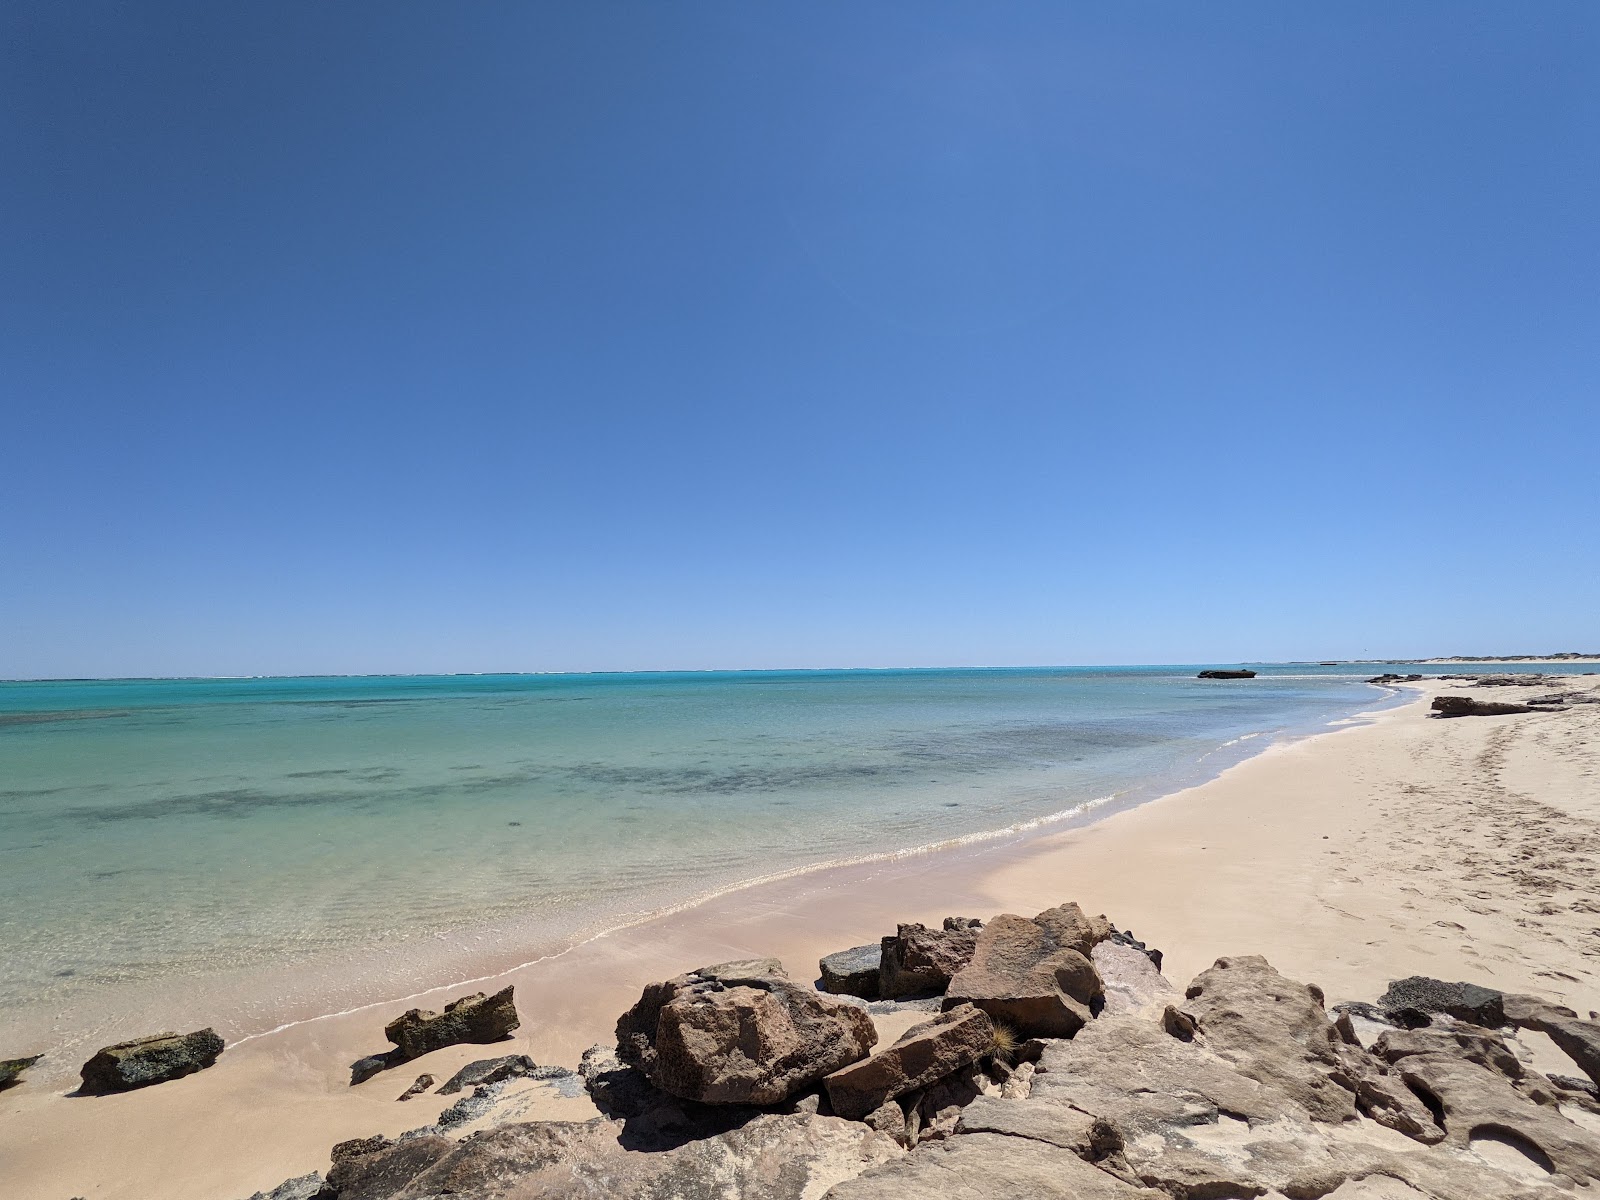 Fotografija Varanus Beach nahaja se v naravnem okolju